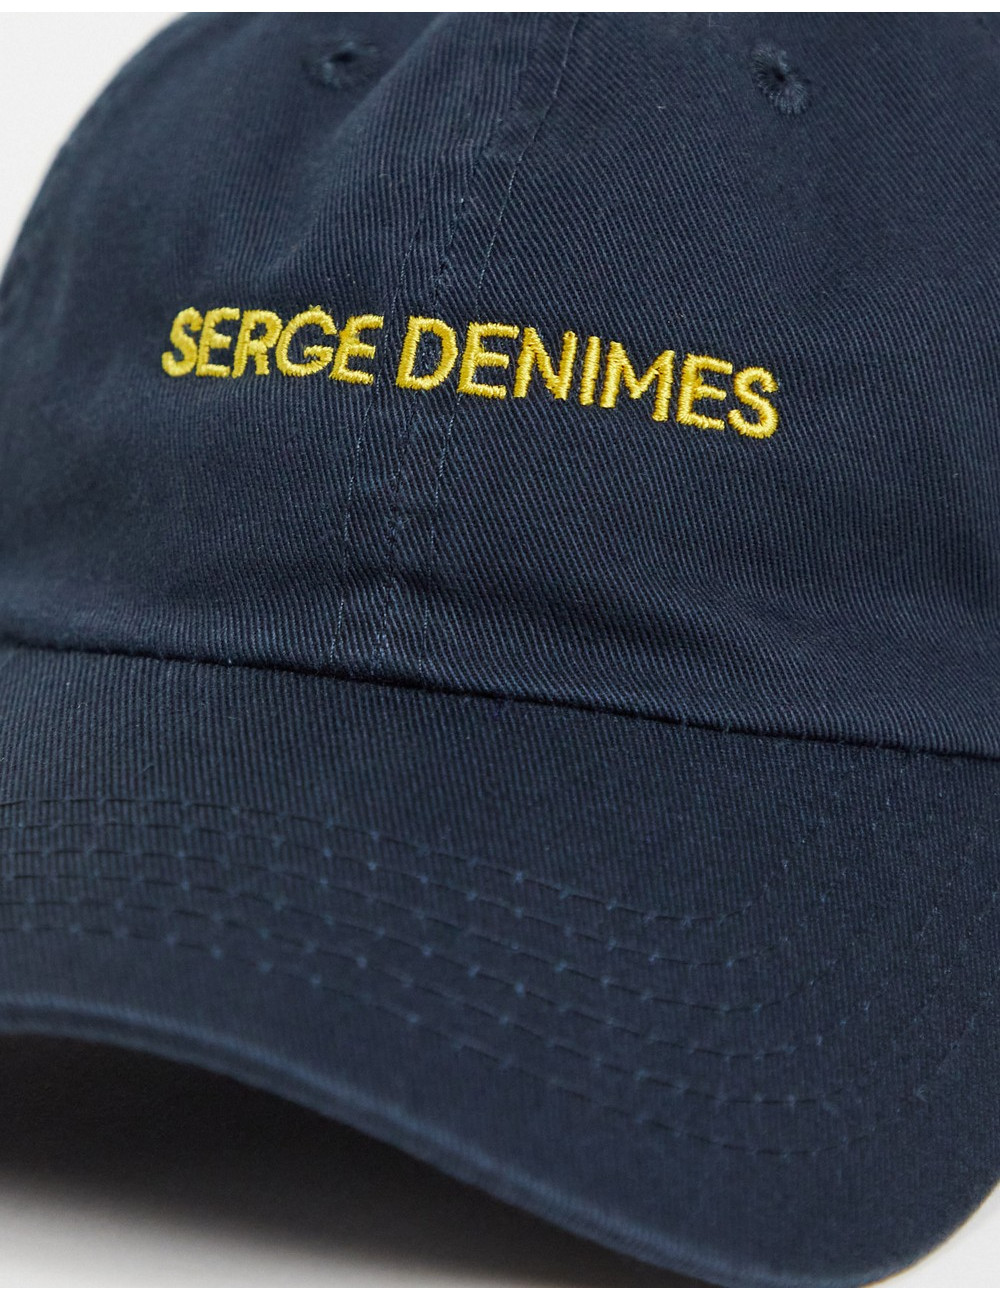 Serge DeNimes logo cap in navy